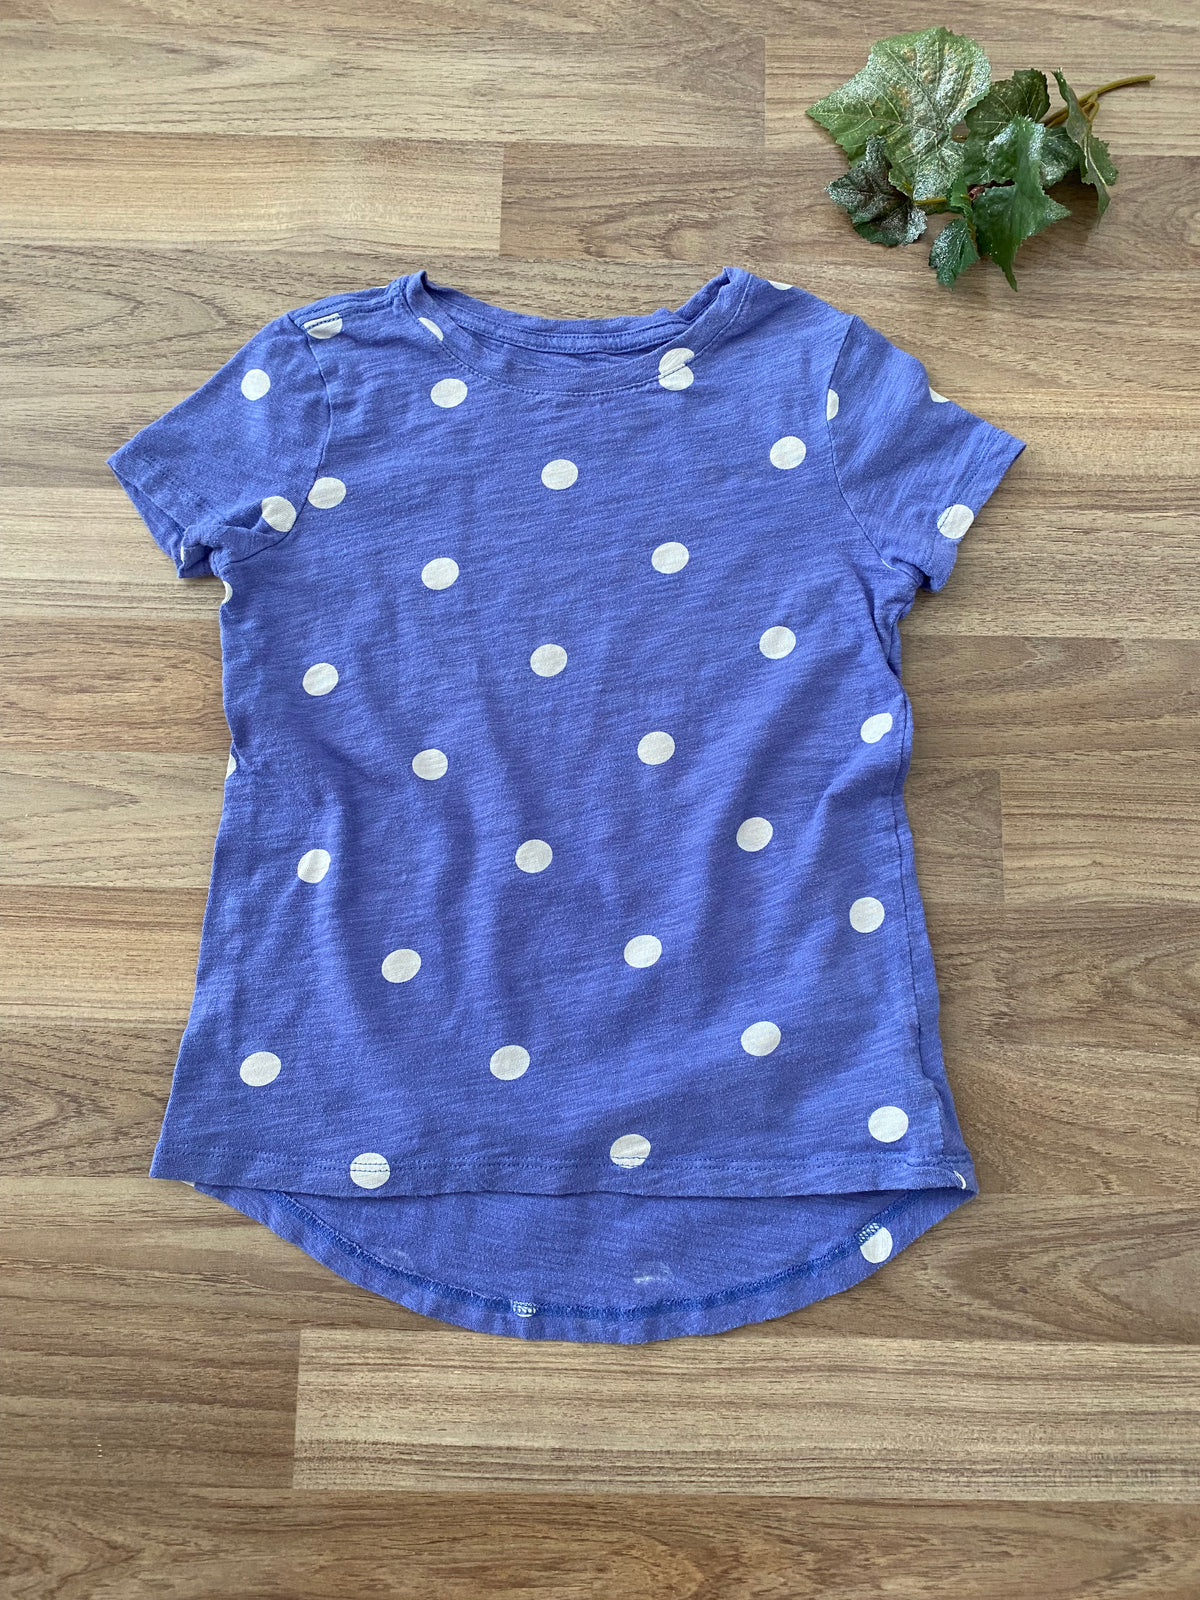 Short Sleeve Top (Girls Size 6-7)